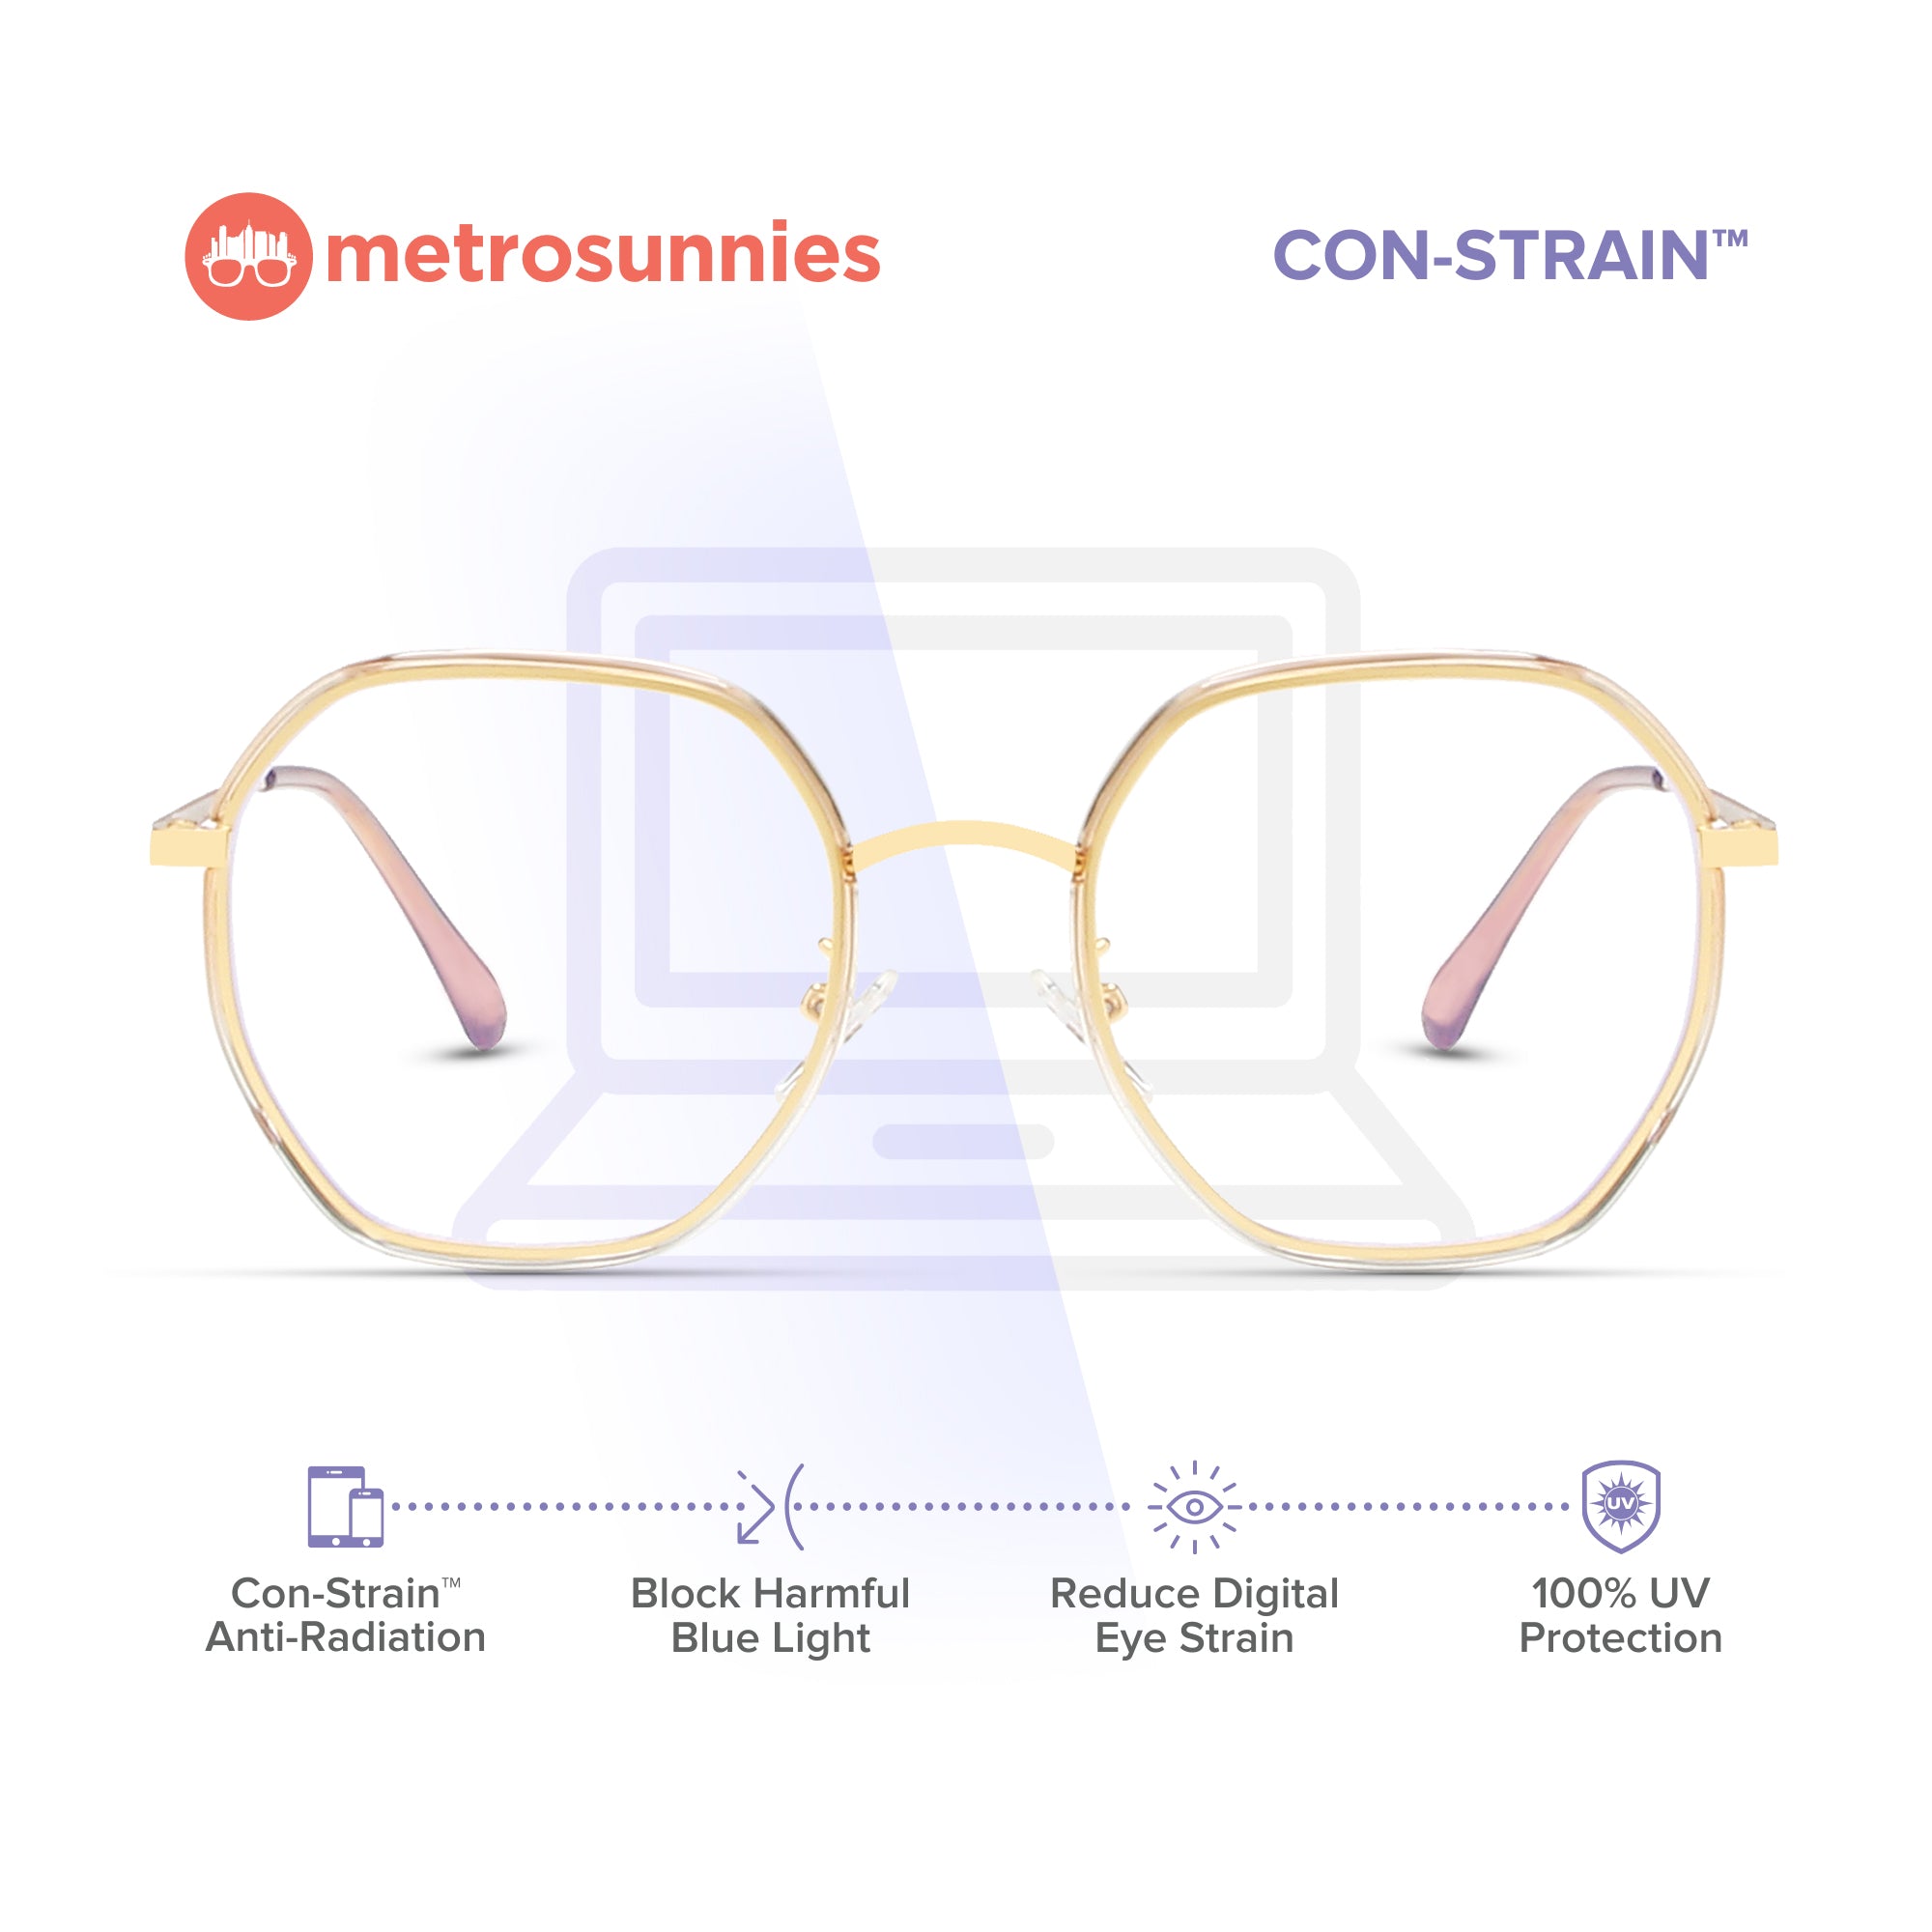 MetroSunnies Clyde Specs (Champagne) / Con-Strain Blue Light / Versairy / Anti-Radiation Eyeglasses